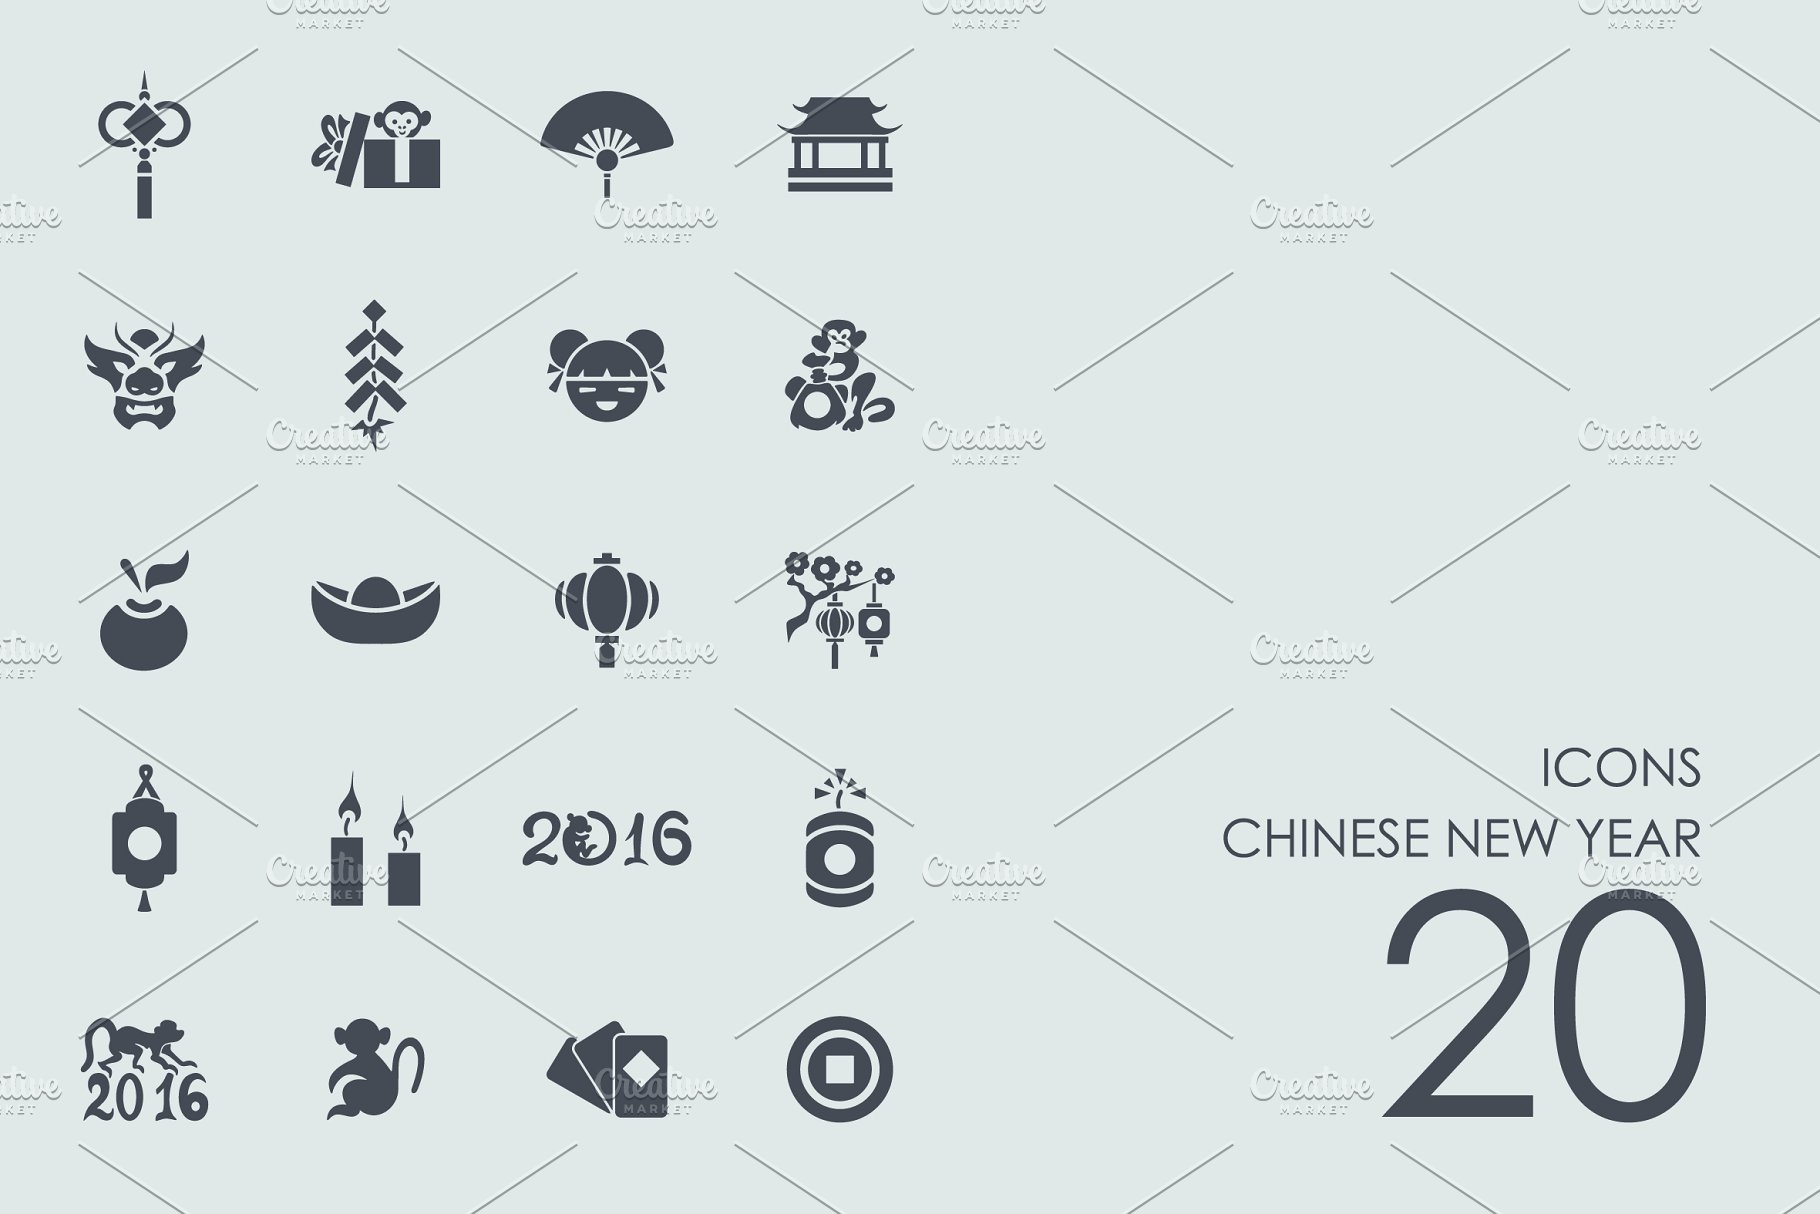 中国农历新年图标 Chinese New Year icon